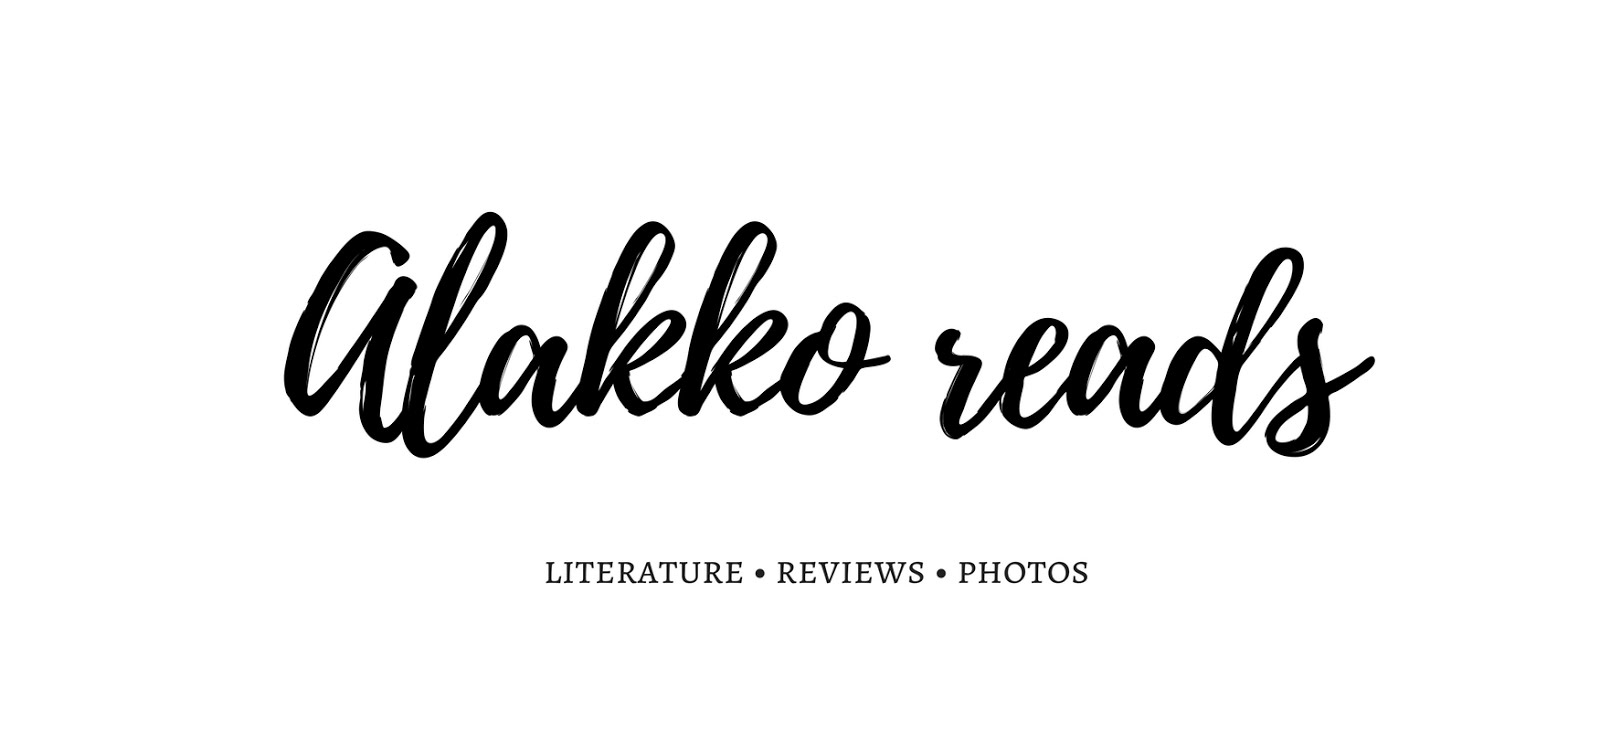 Alakko reads | recenzje, książki, literatura